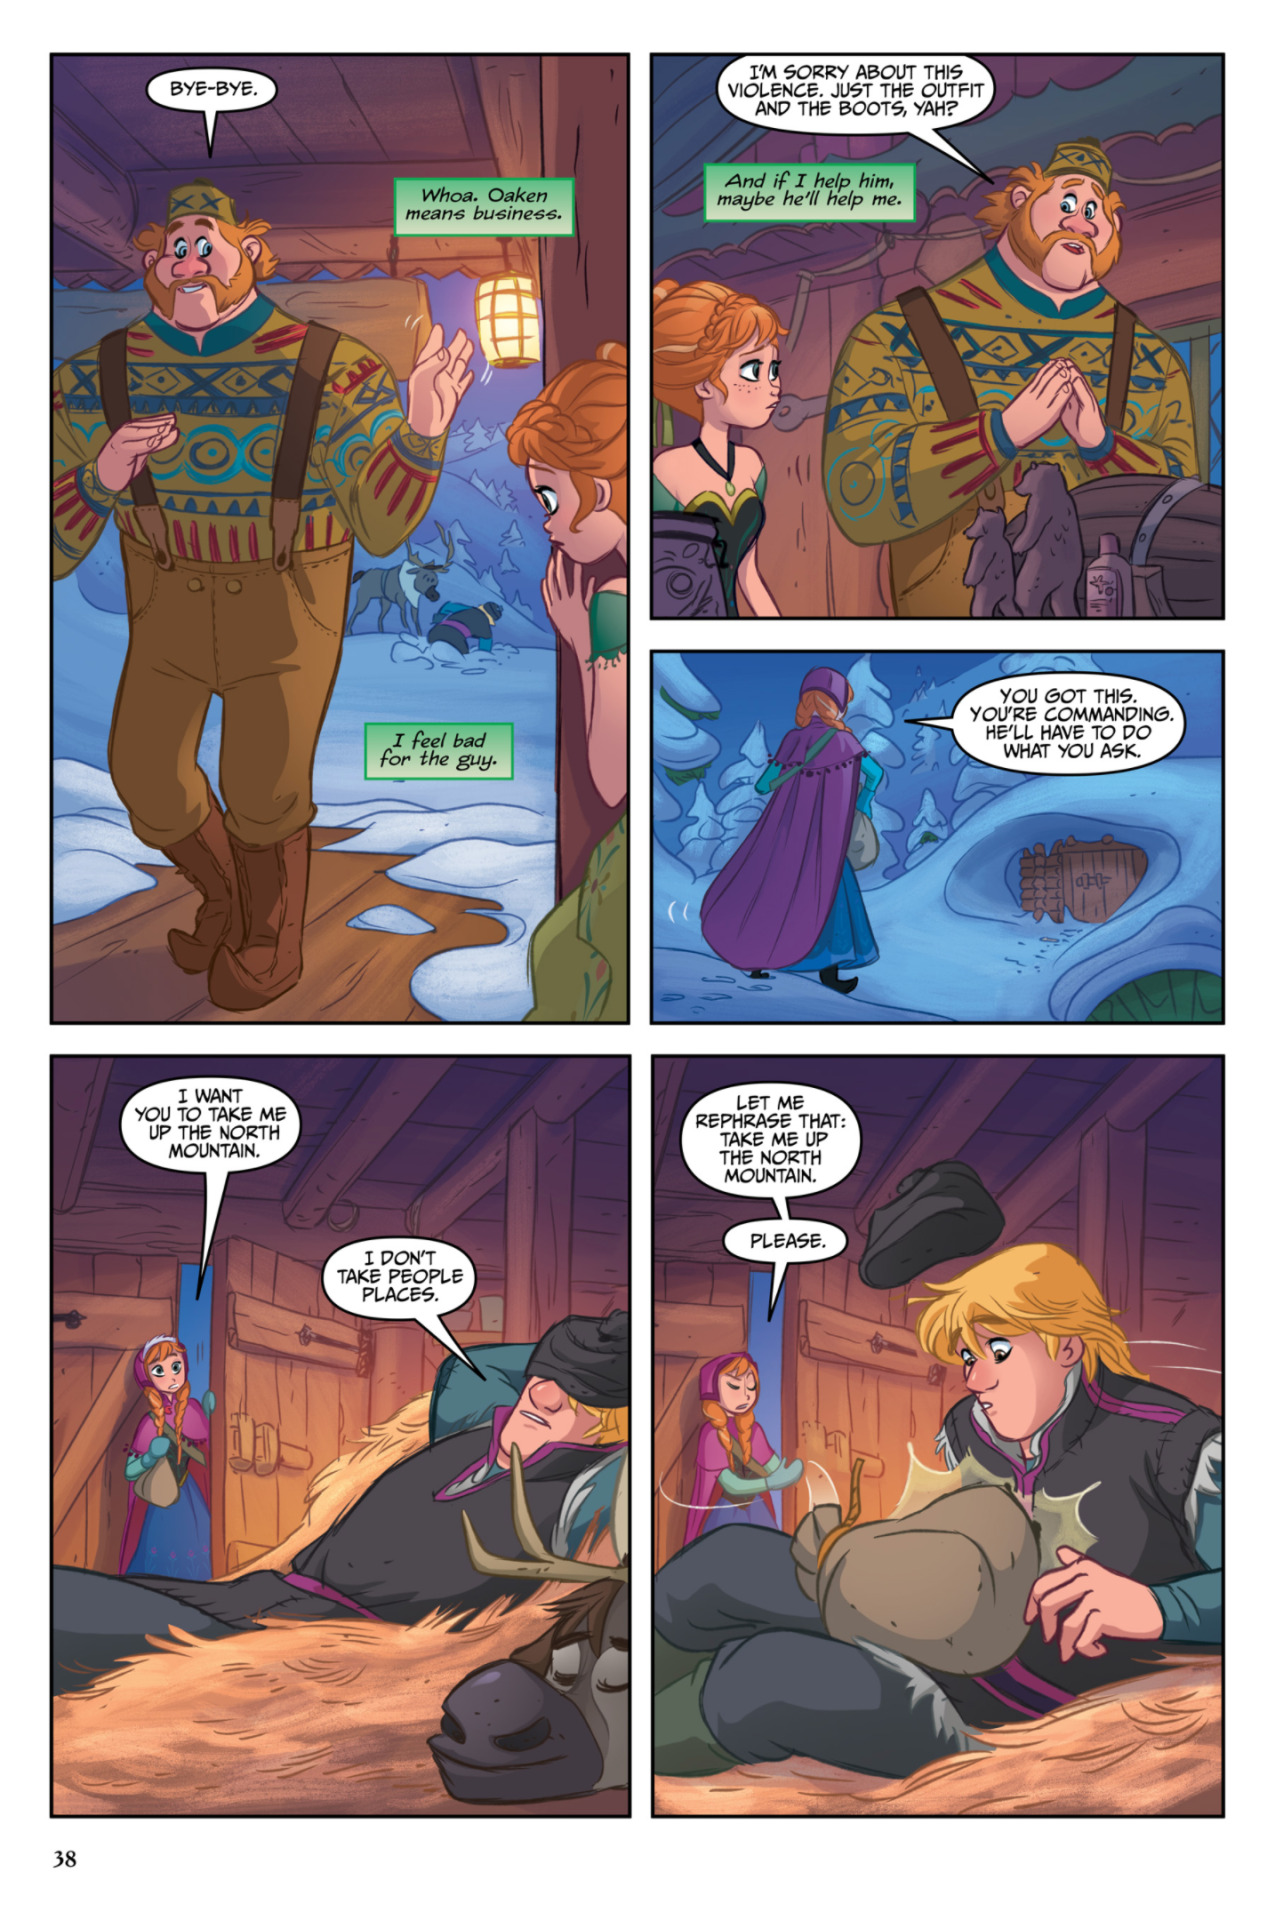 werkelijk Blazen verbrand Frozen comic (34) by sarahstory on DeviantArt